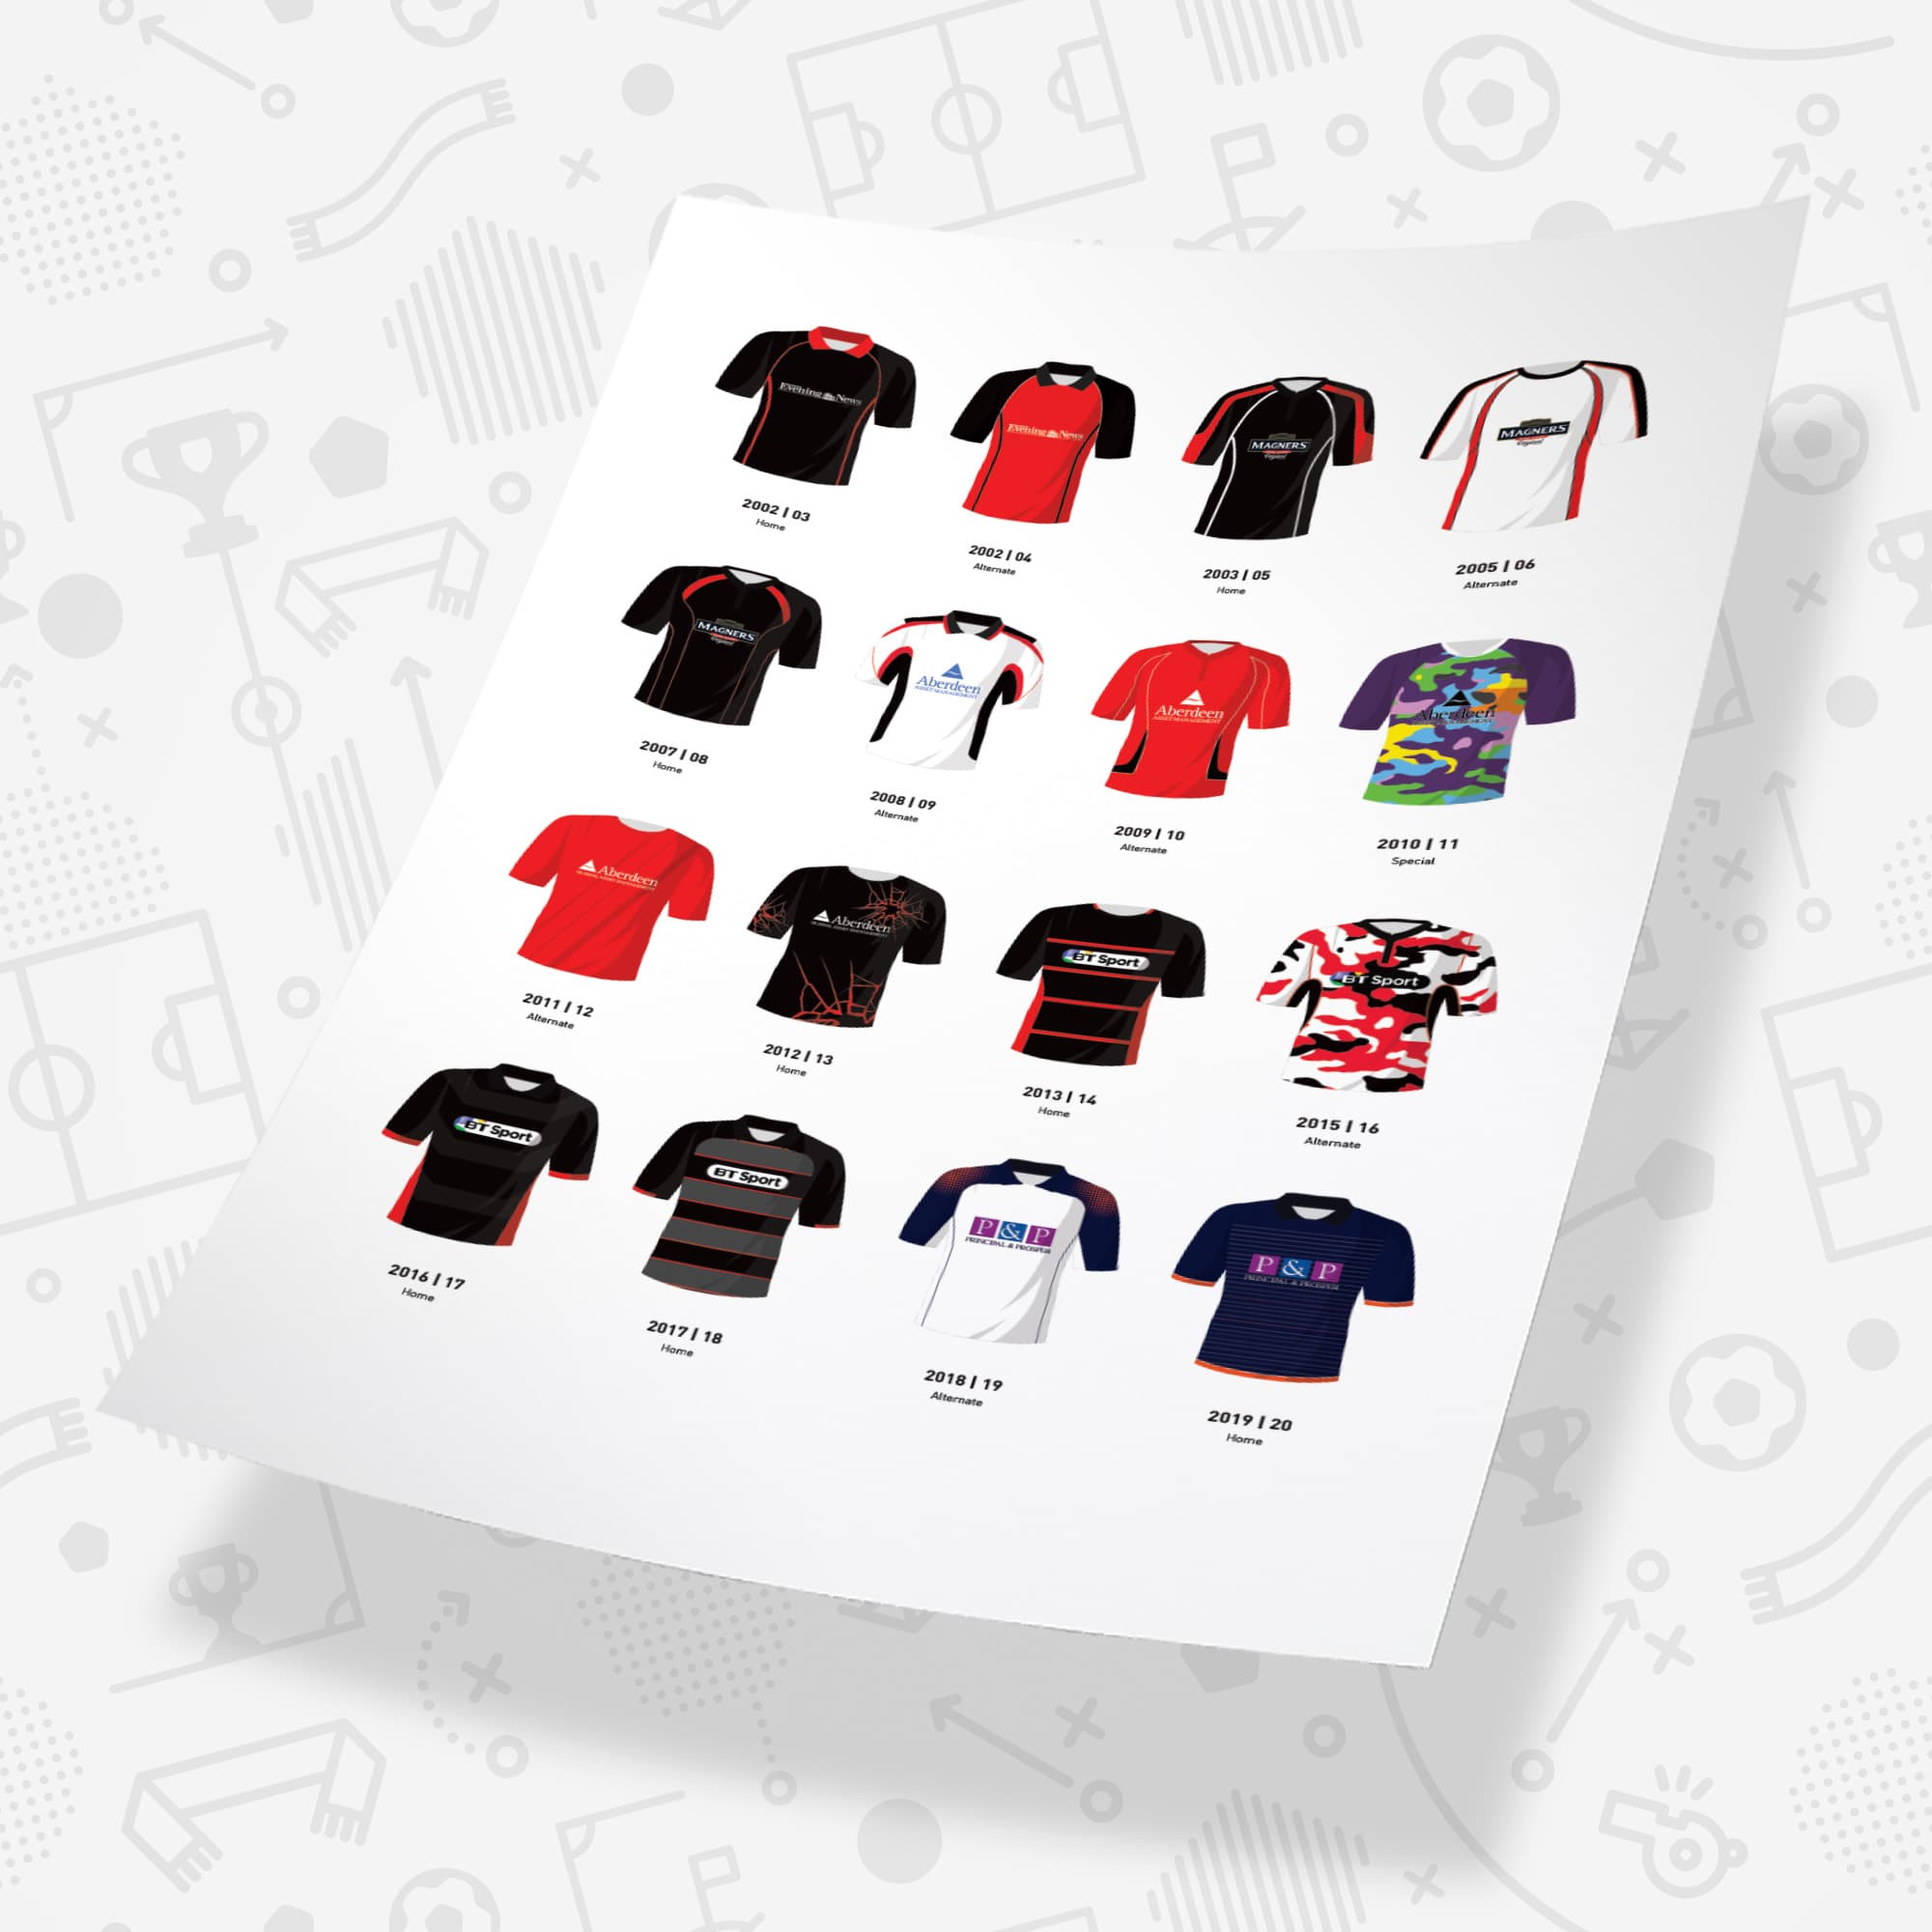 Edinburgh Classic Kits Rugby Union Team Print